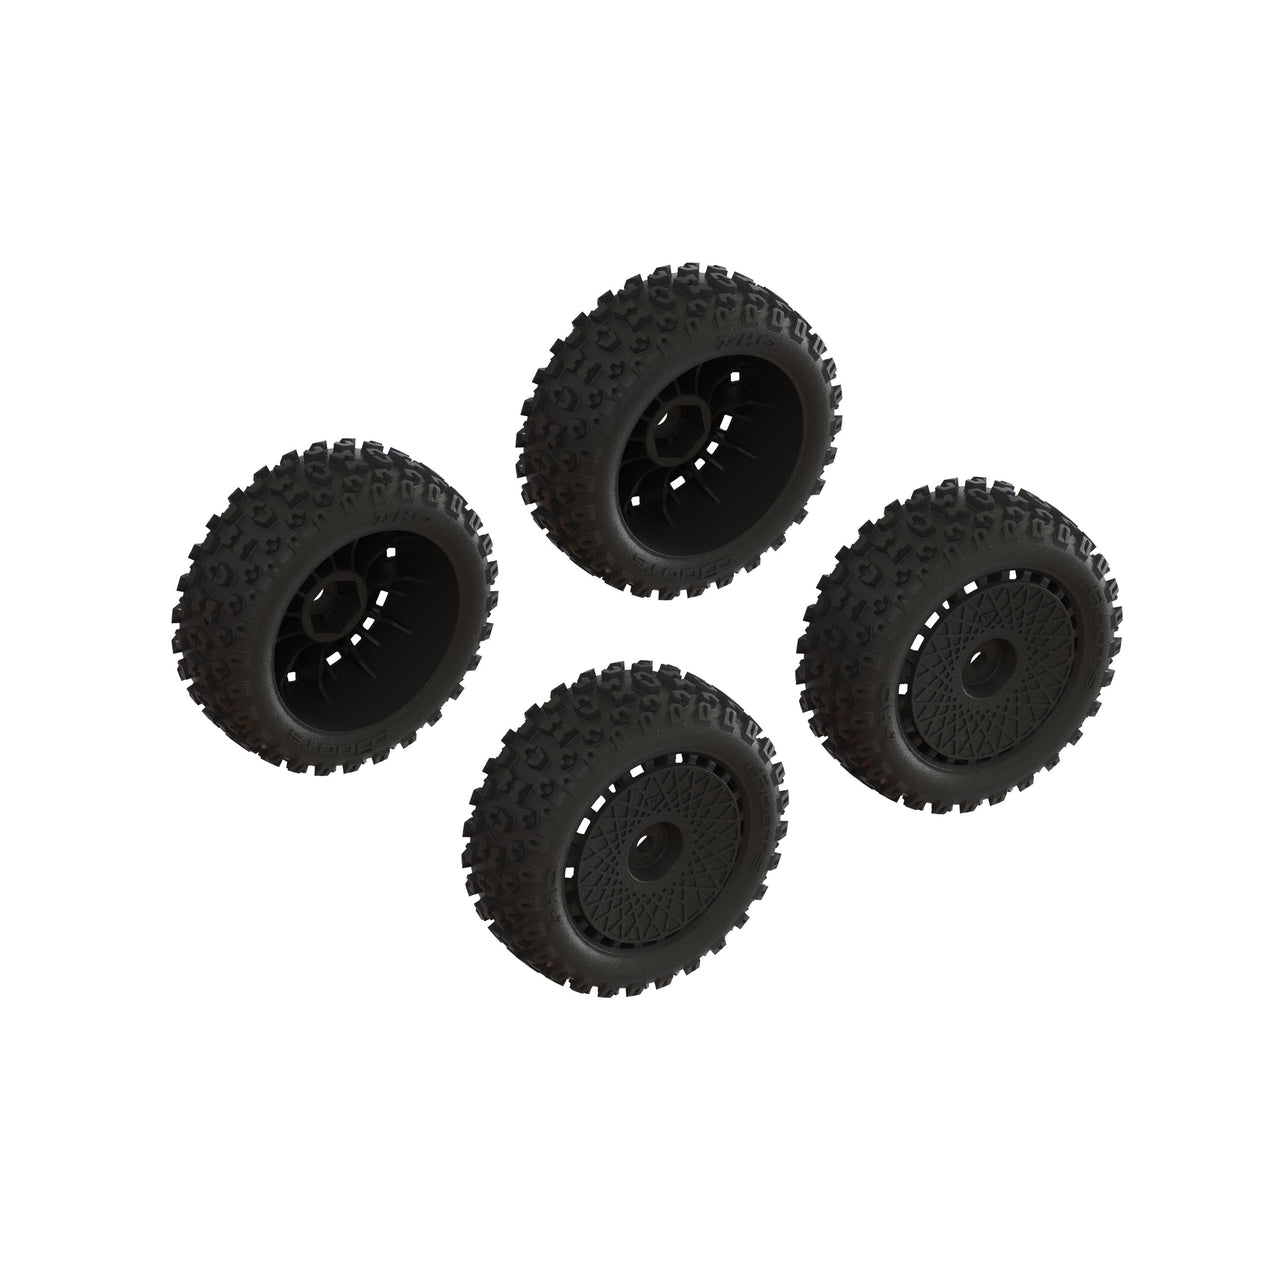 ARA550114 Jeu de pneus dBoots '2-HO' collés (noir) (2 paires)